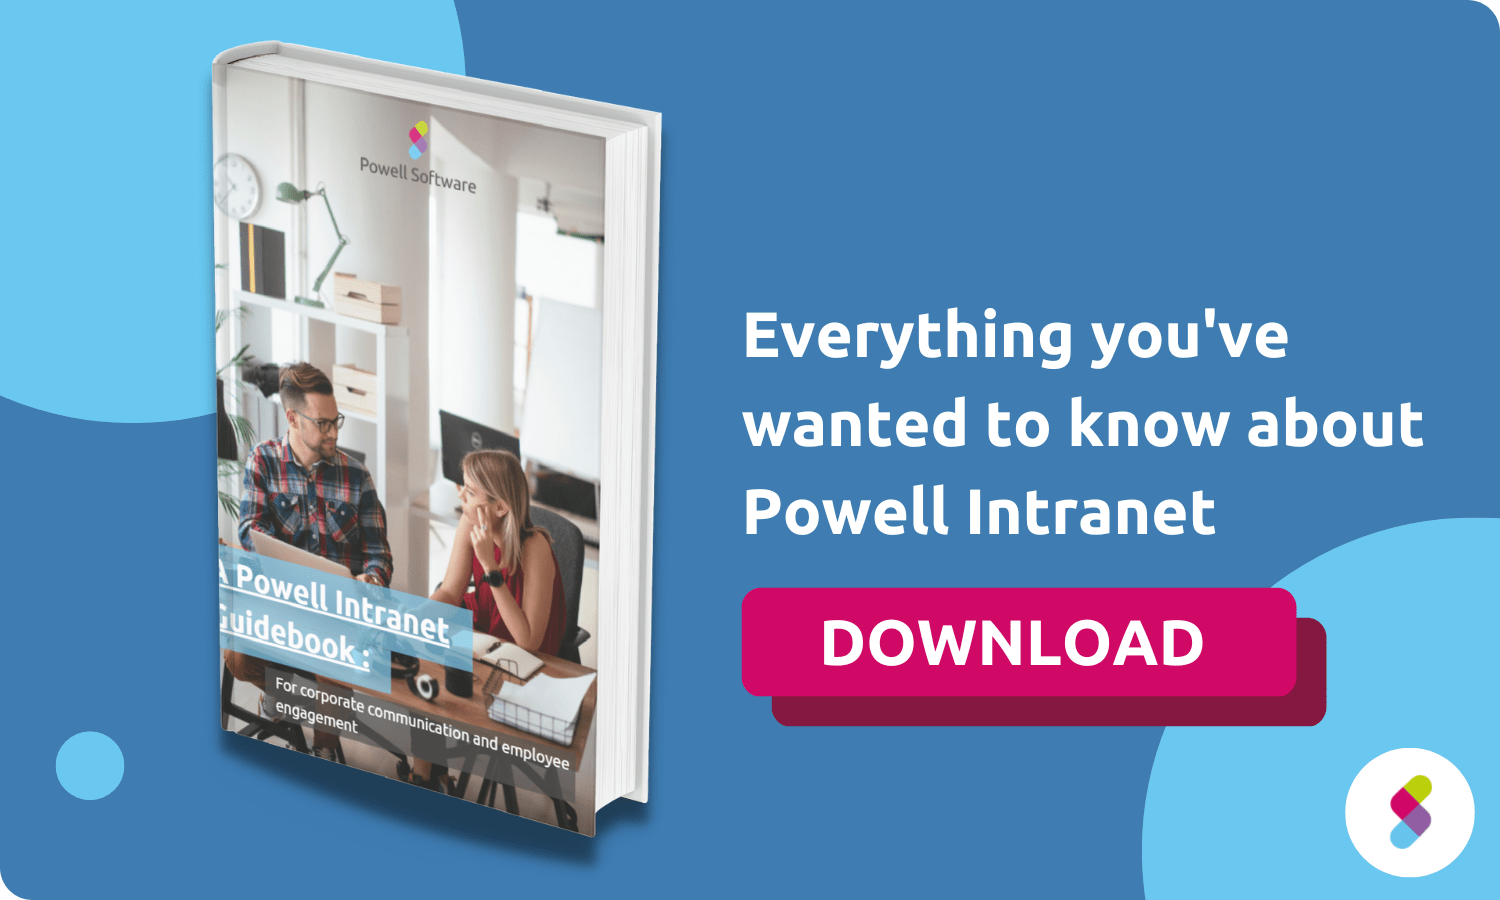 Powell Intranet Ebook